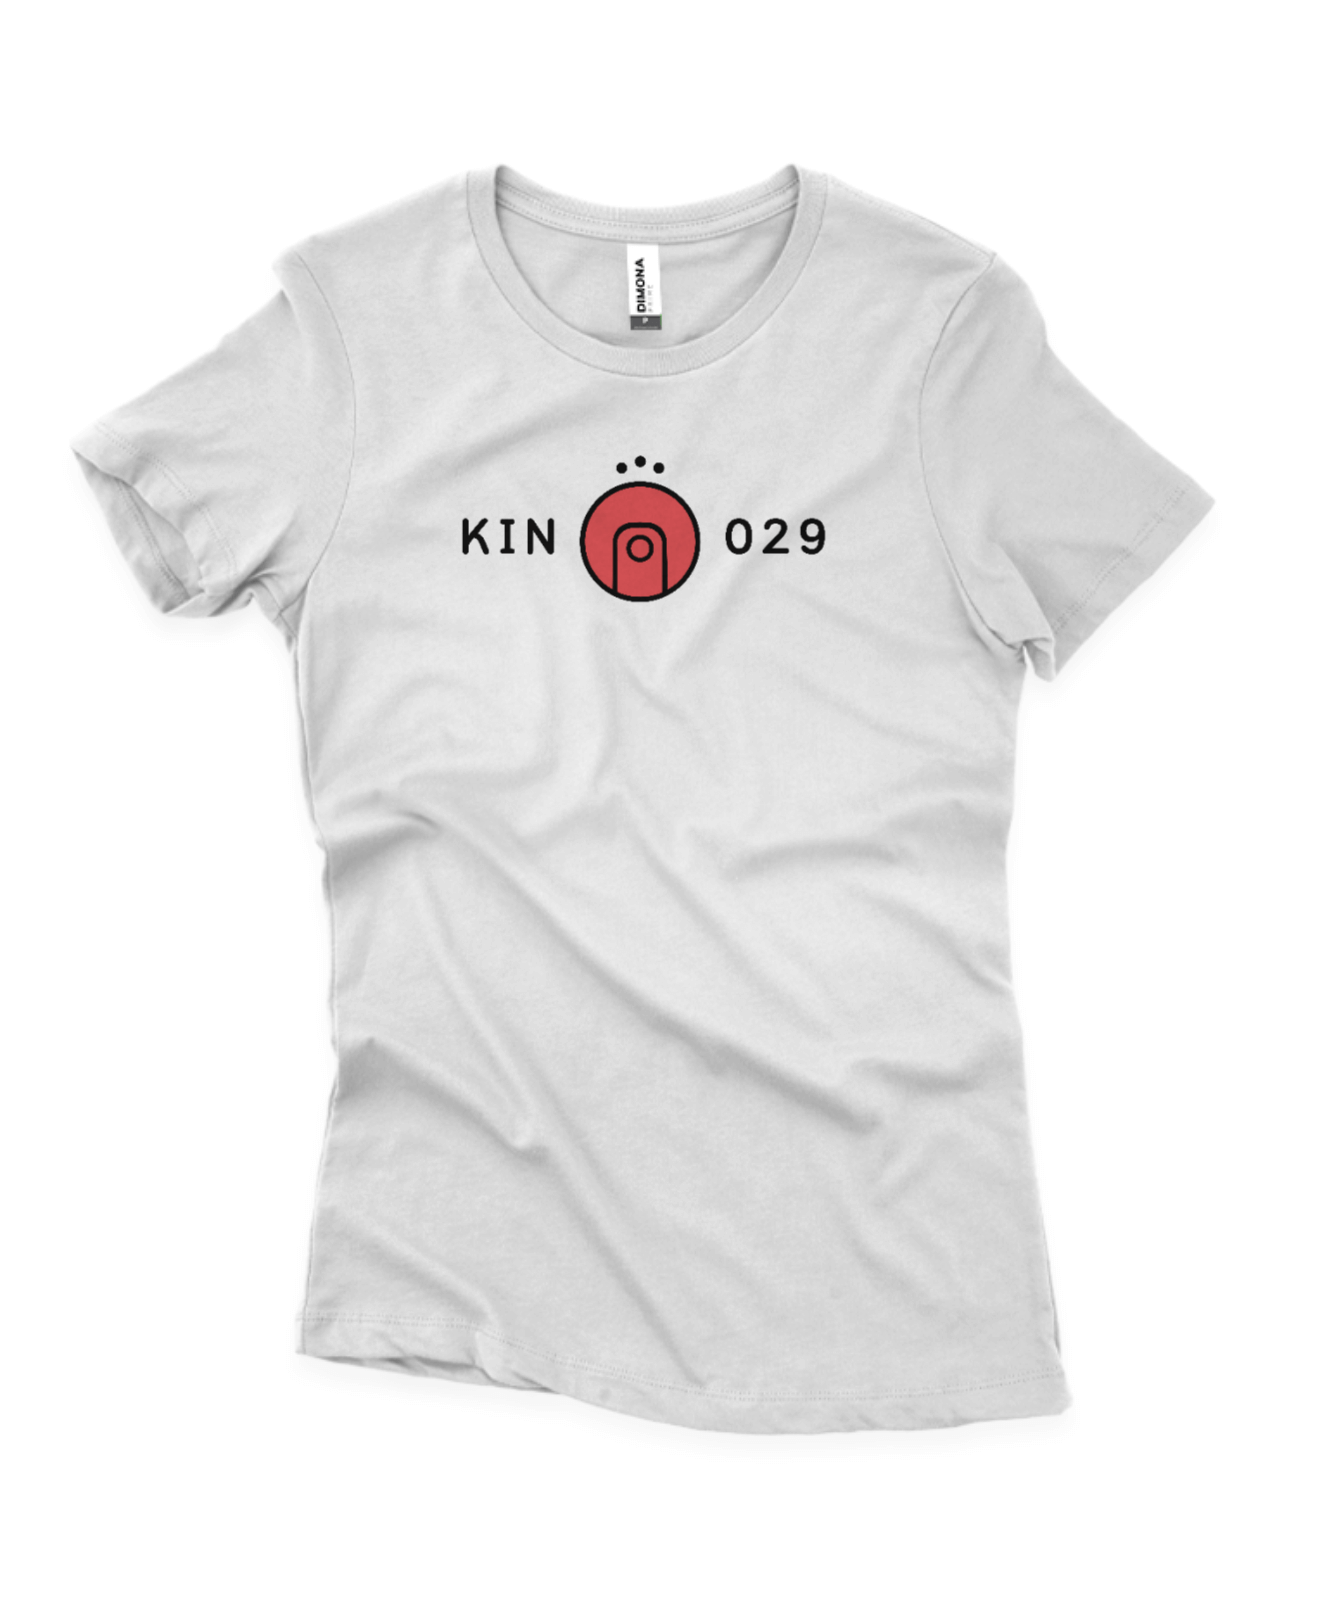 Mockup Camisa Branca - Camisa Feminina Kin 029 - Lua Elétrica Vermelha - Kin 29